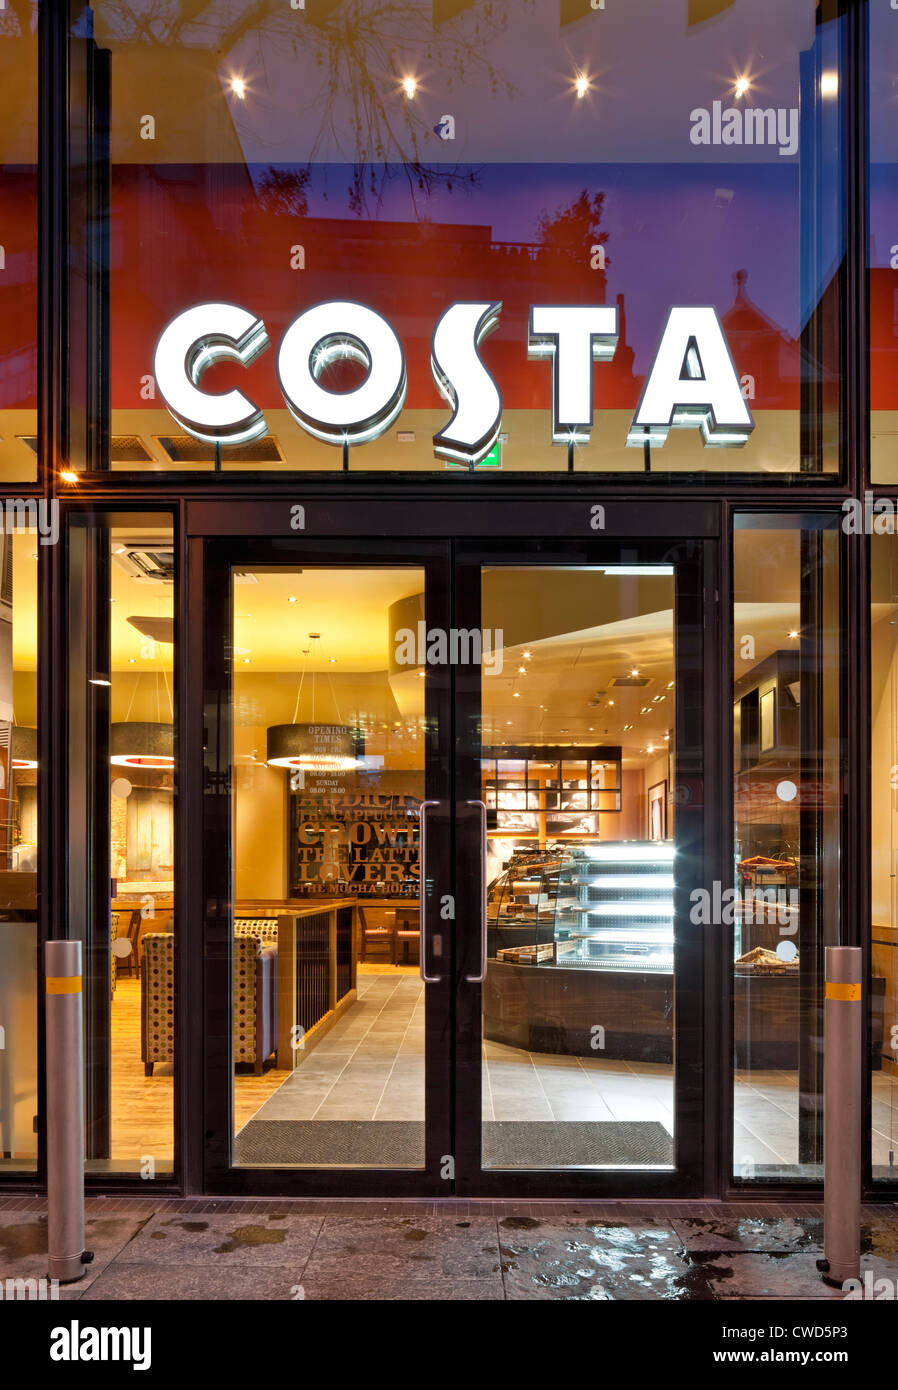 Costa Coffe bar in Tooley Street, London. Stock Photo